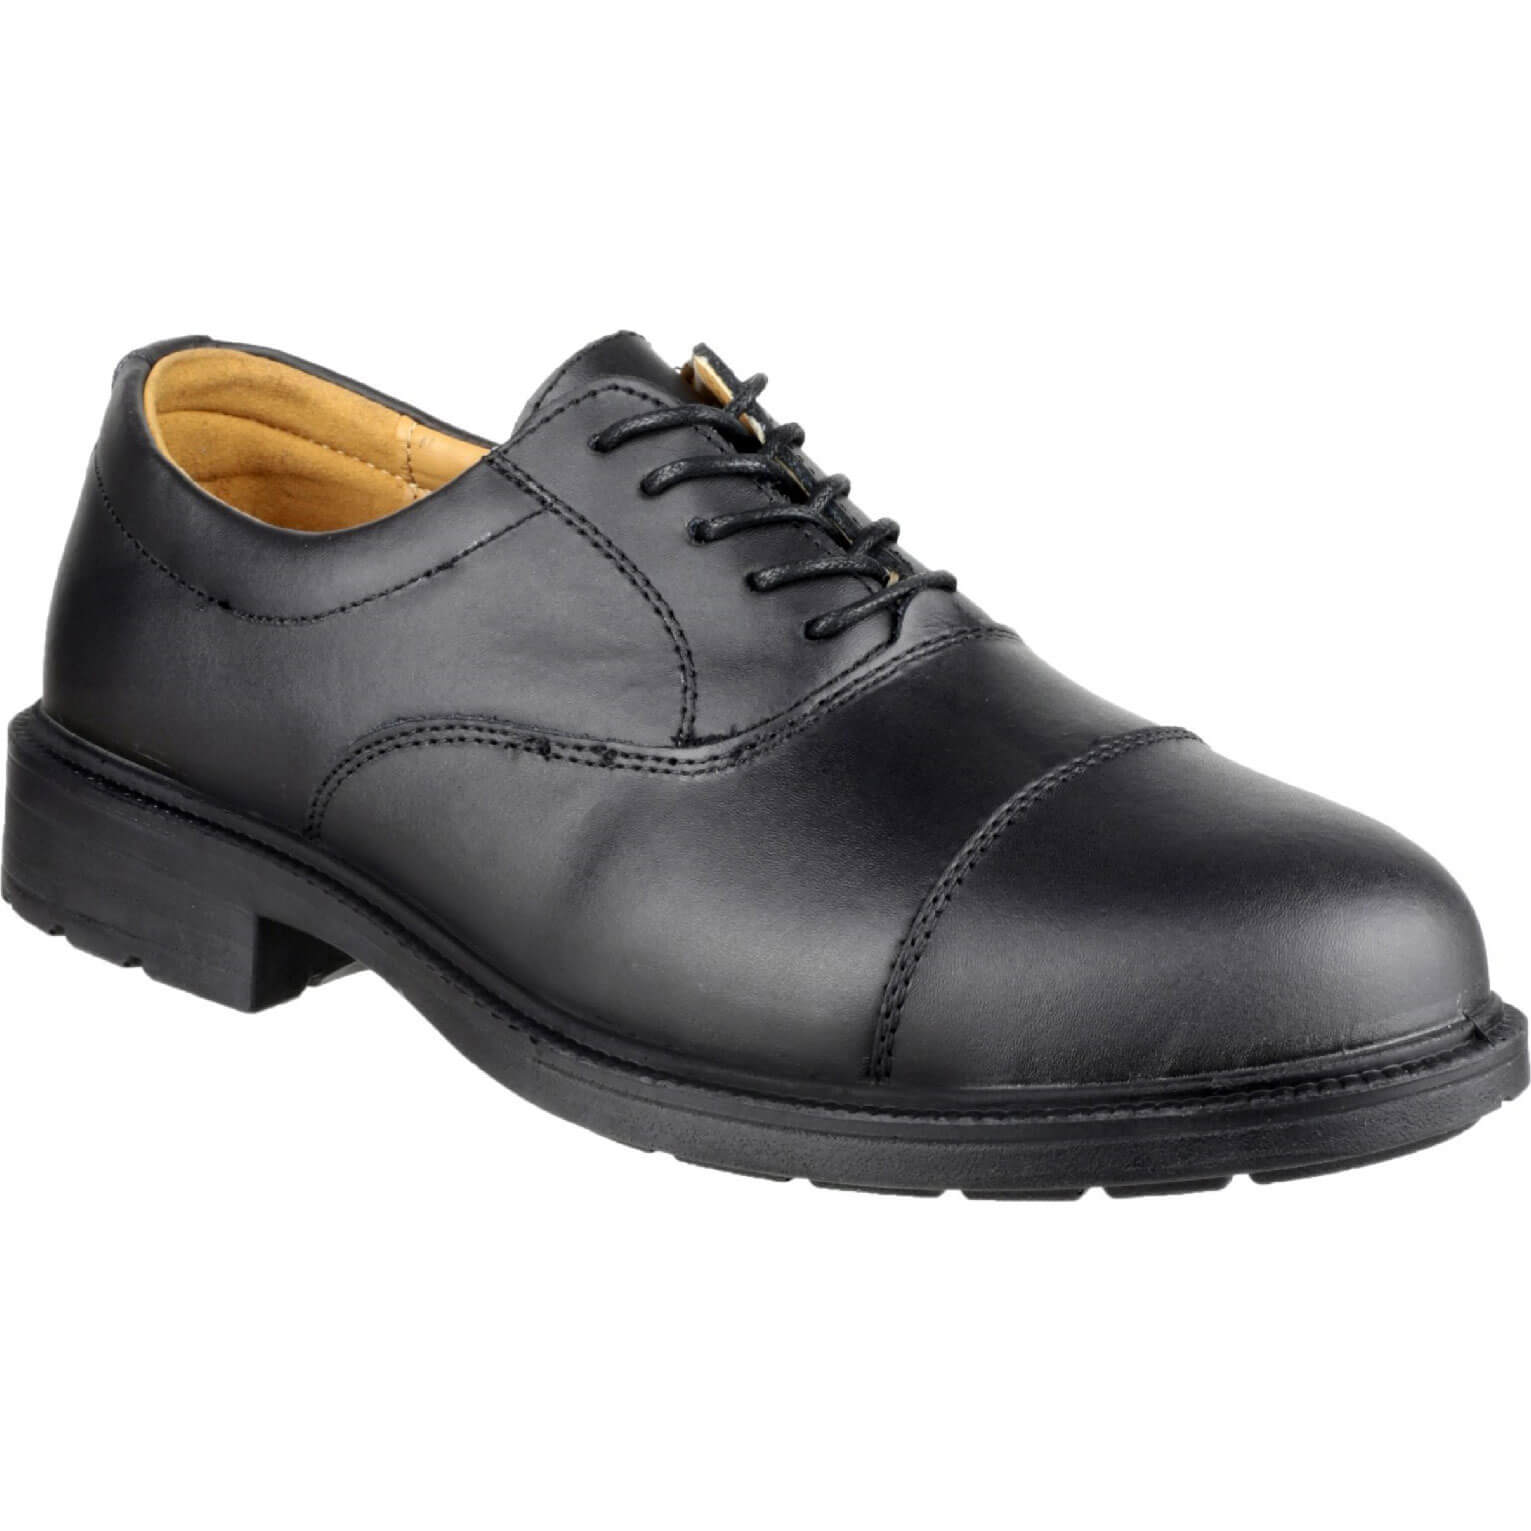 Image of Amblers Safety FS43 Work Safety Shoe Black Size 14